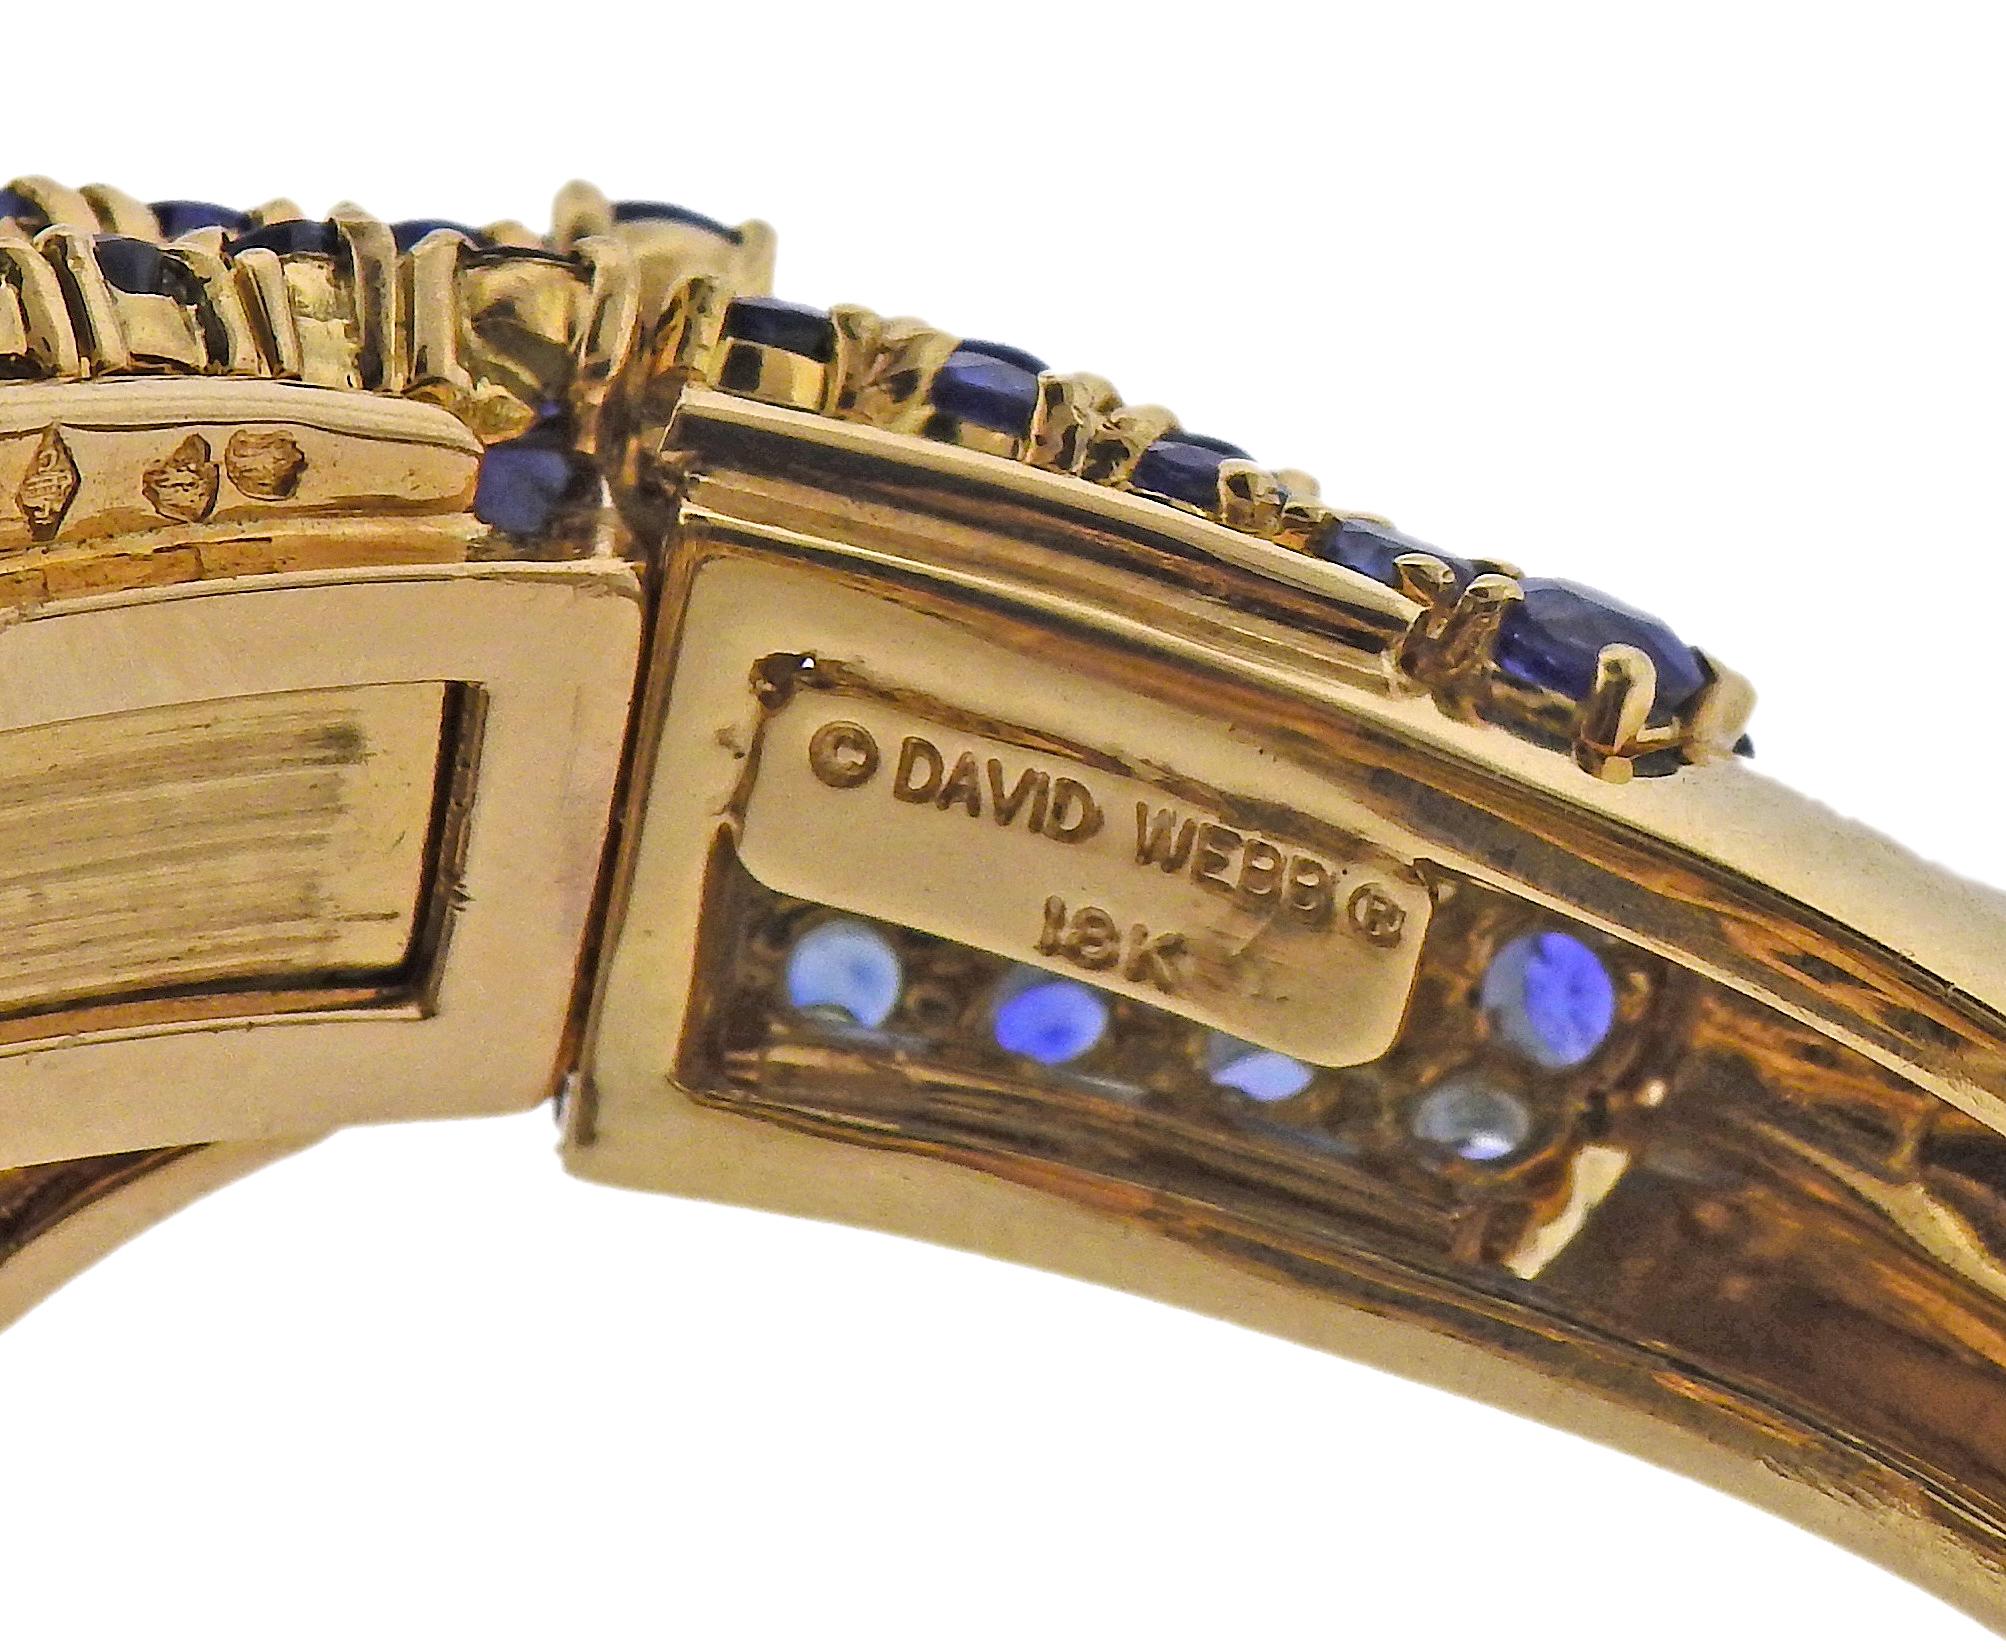 blue sapphire gold bracelet